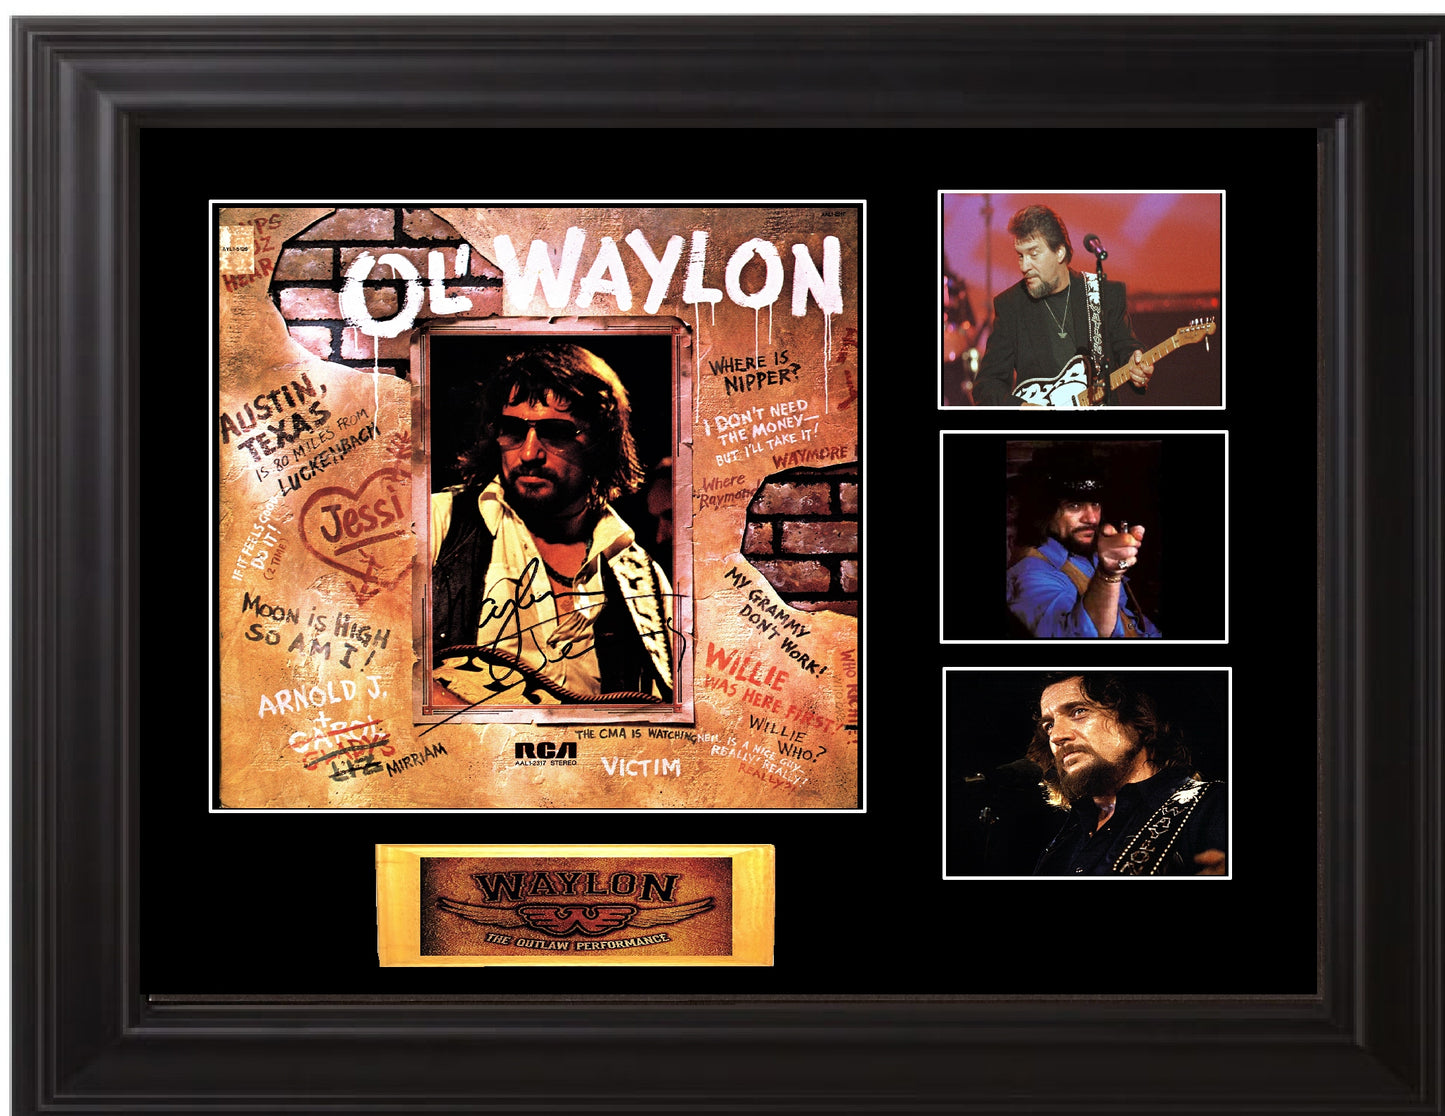 Waylon Jennings Autographed Lp "Ol' Waylon" - Zion Graphic Collectibles